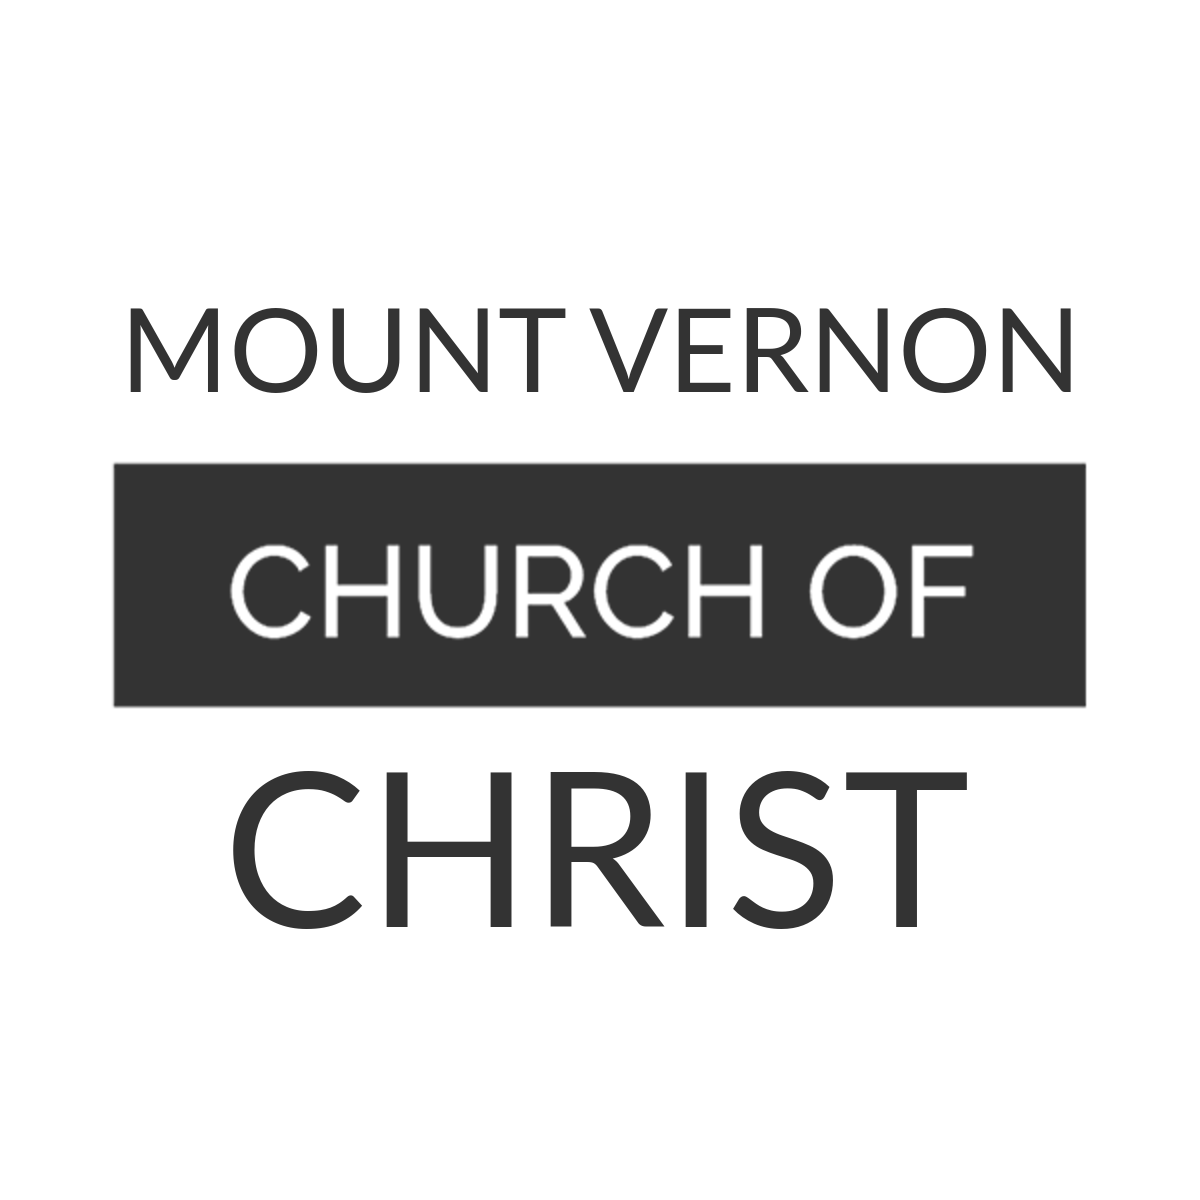 Mount Vernon church of Christ